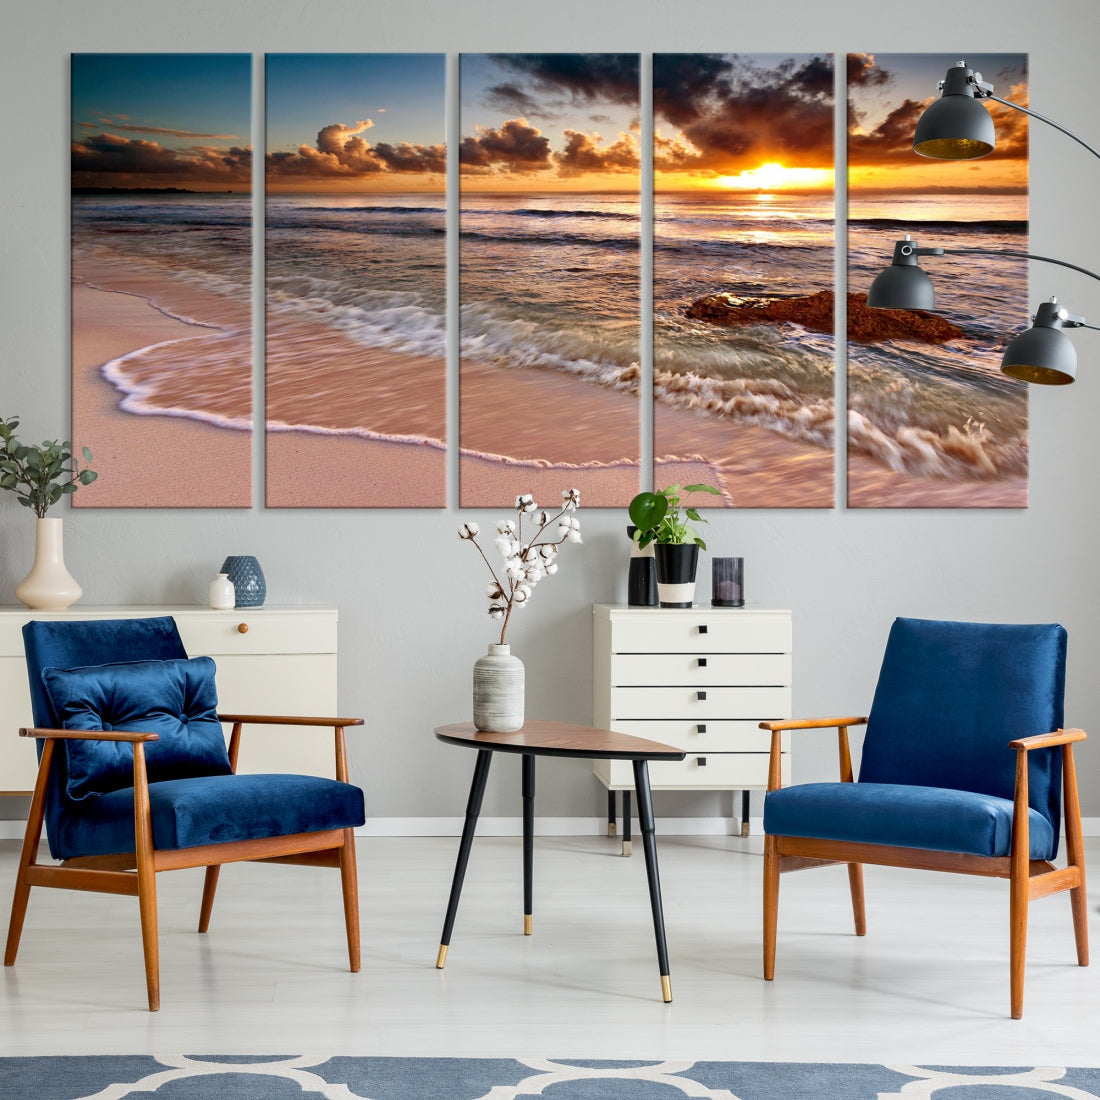 Breathtaking Sunset and Calm Beach Waves Canvas Wall Art Print